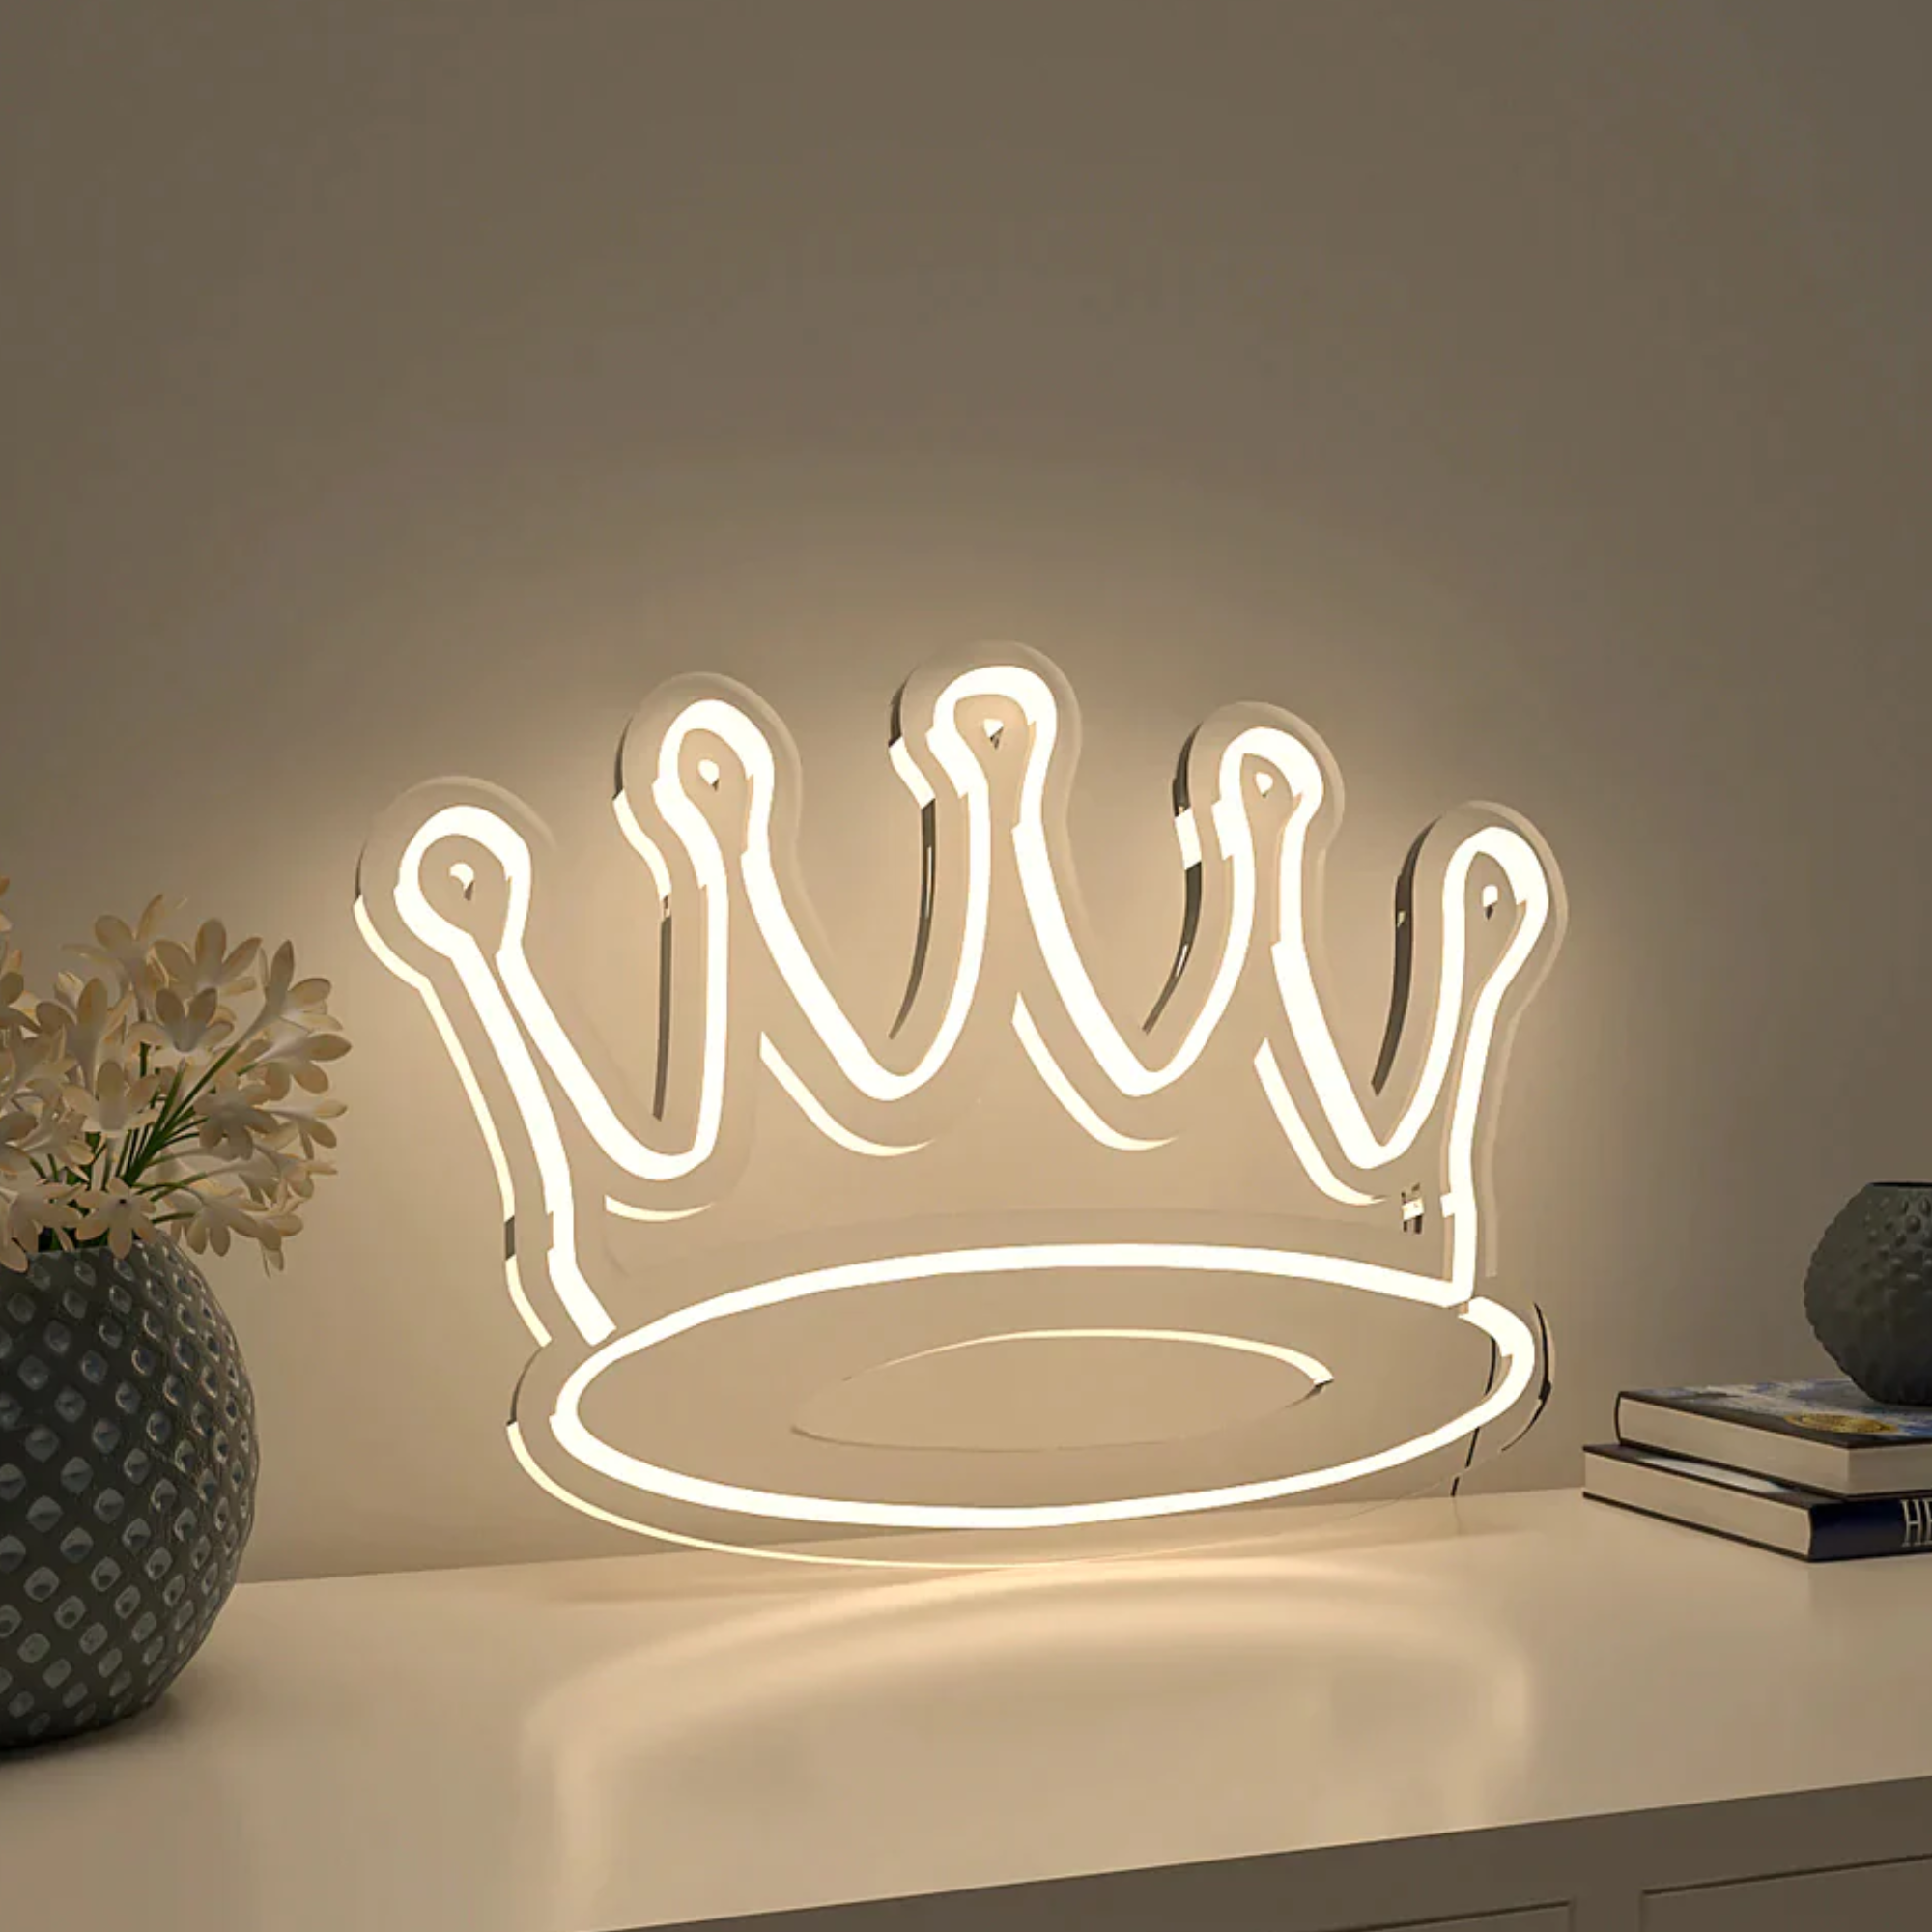 Queen Crown Design Warm LED Neon Light